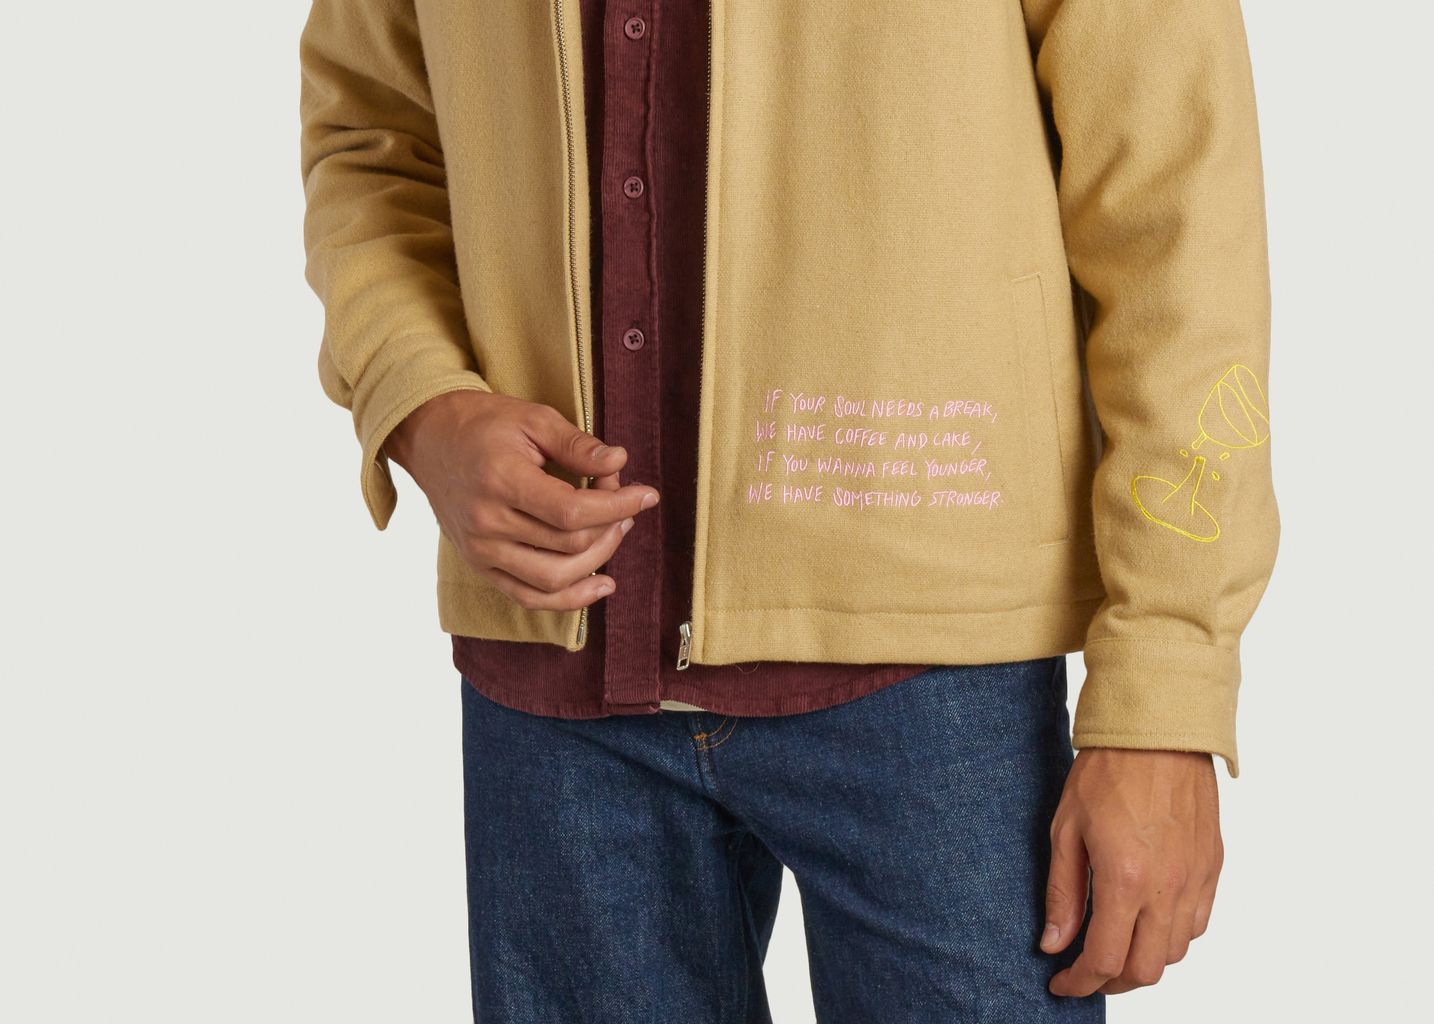 Wool Club Icon Jacket  - Reception Clothing